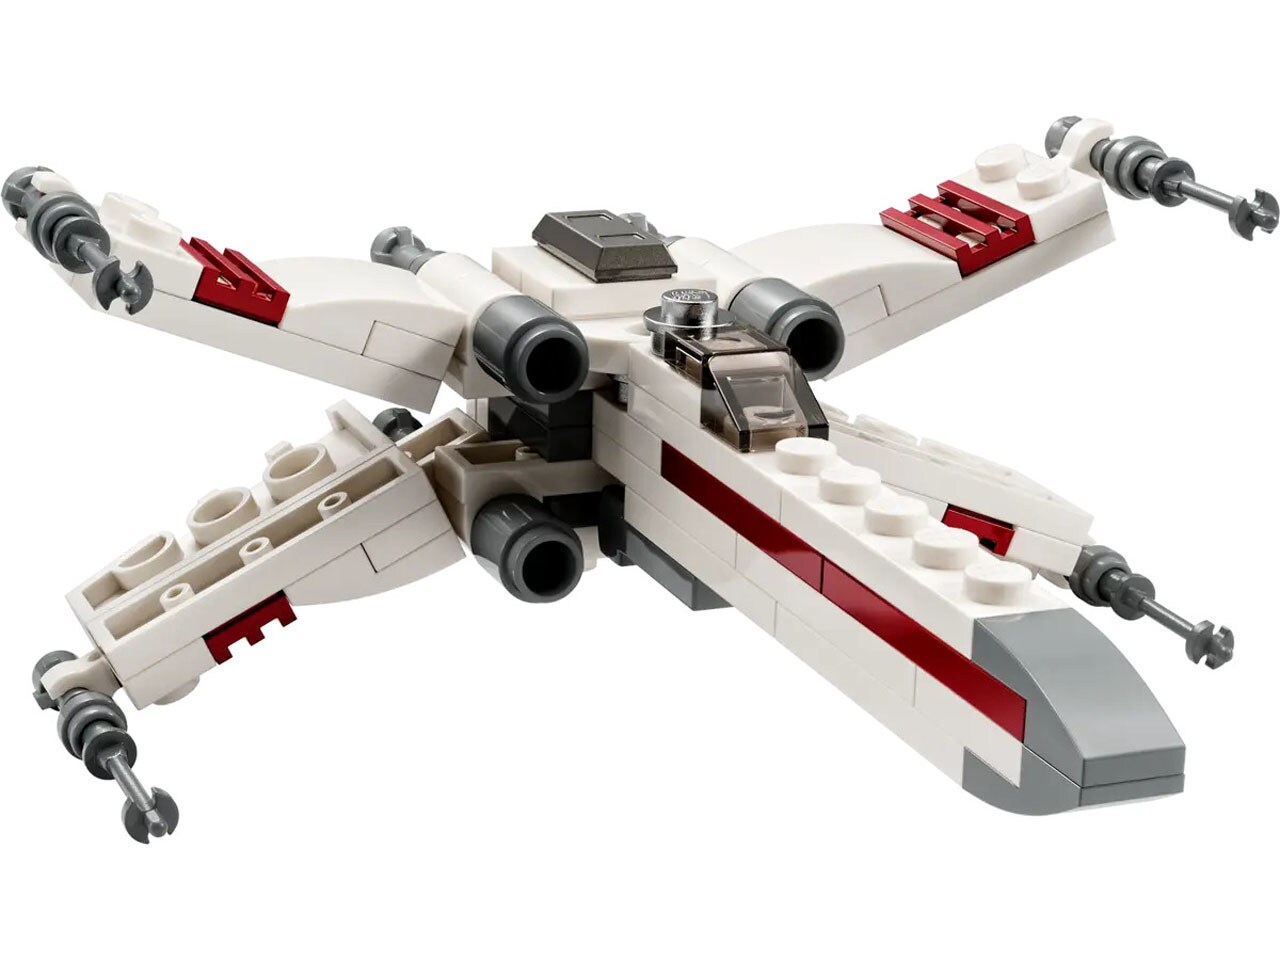 LEGO Star Wars X-Wing Starfighter set